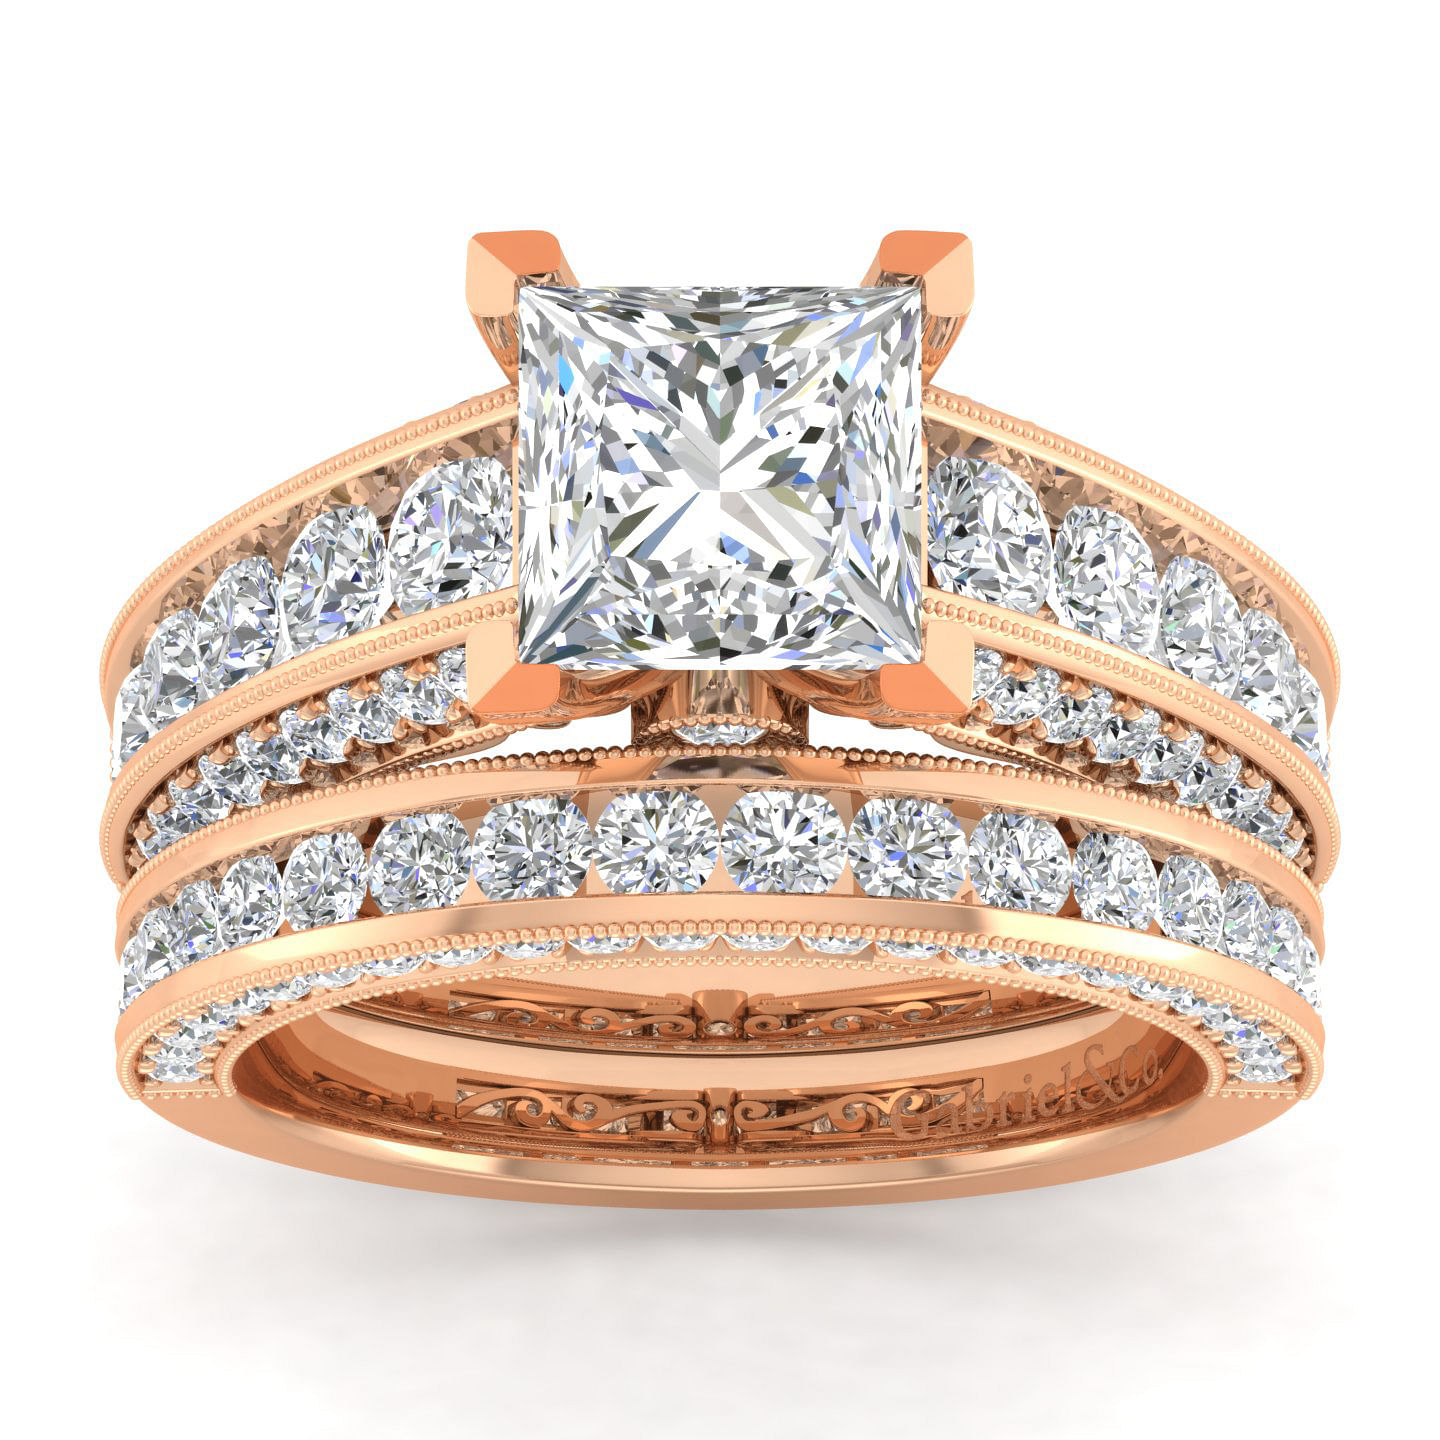 Vintage Inspired 14K Rose Gold Wide Band Princess Cut Diamond Engagement Ring